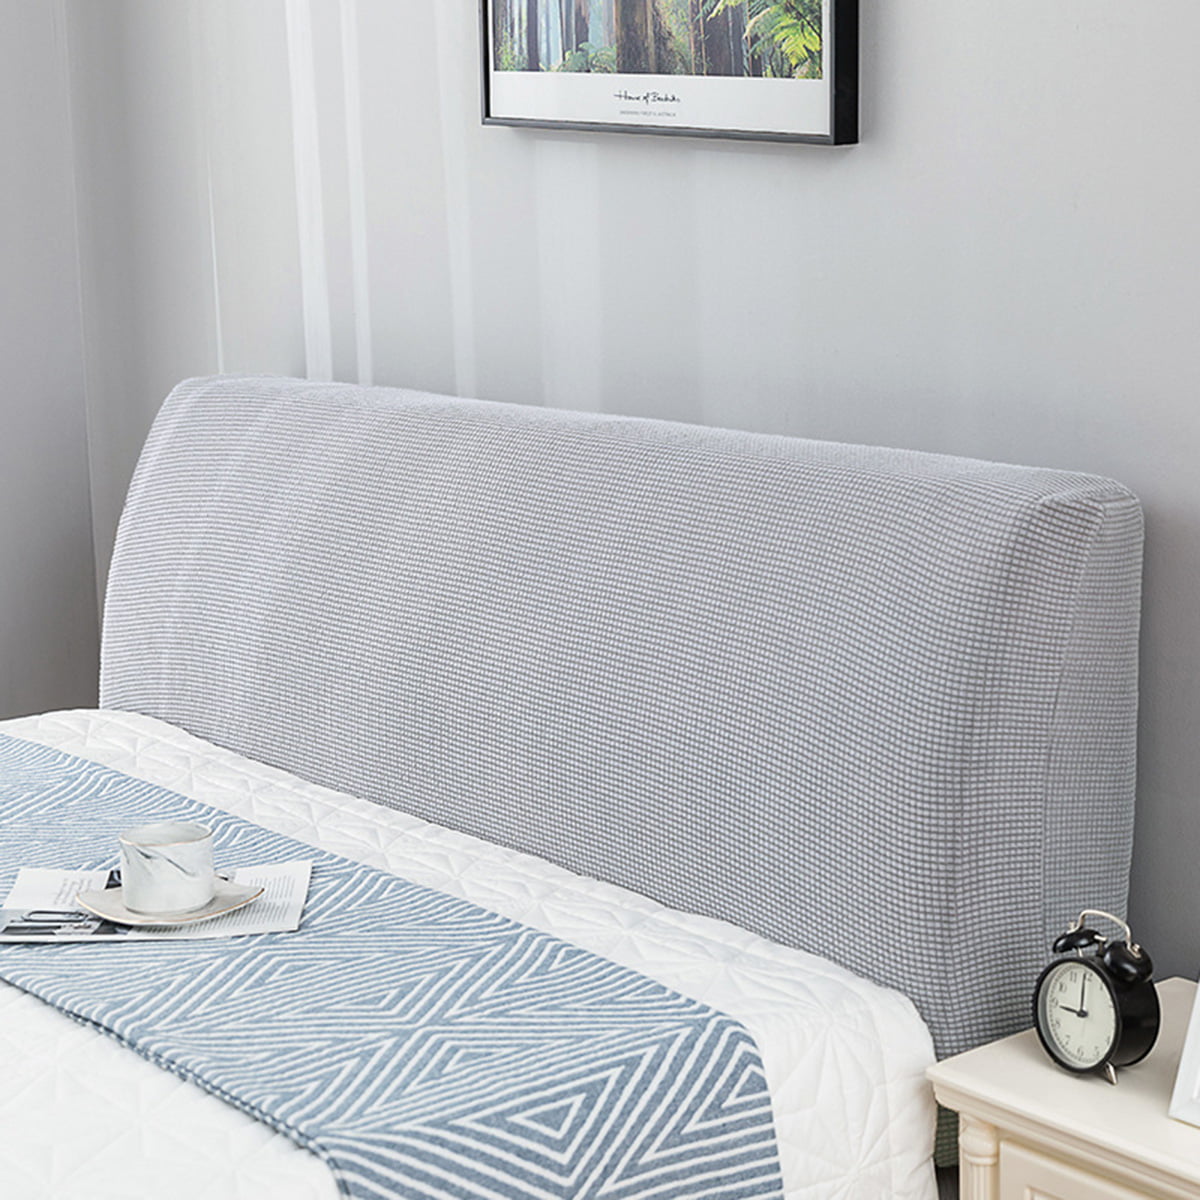 Sofa Bed Headboards Slipcover Protector Elastic Dustproof Cover for Bedroom 